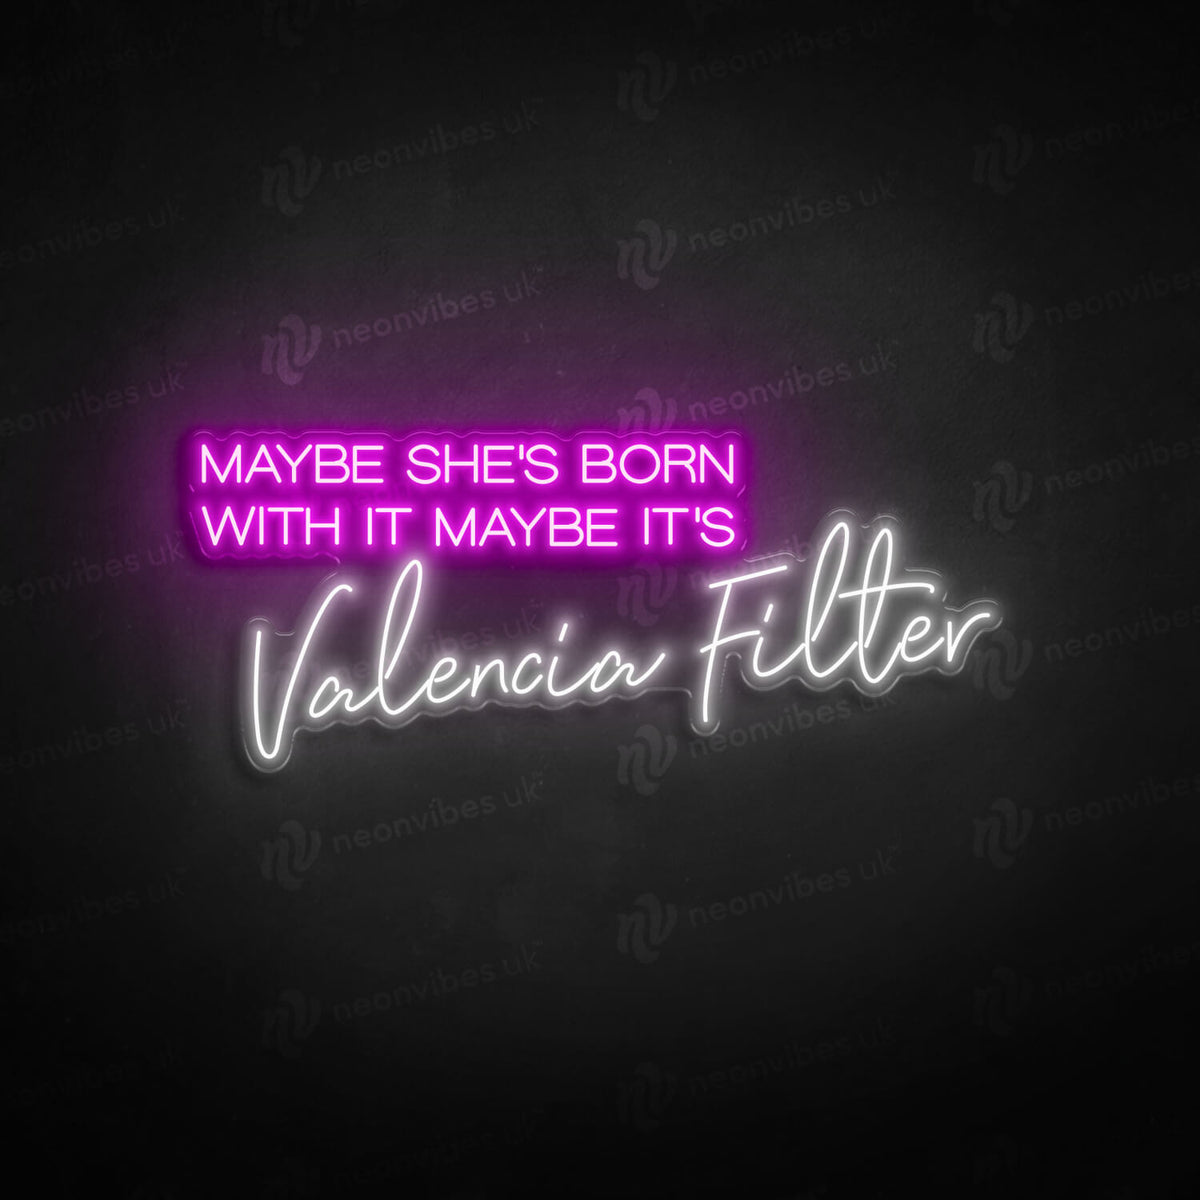 Valencia Filter neon sign